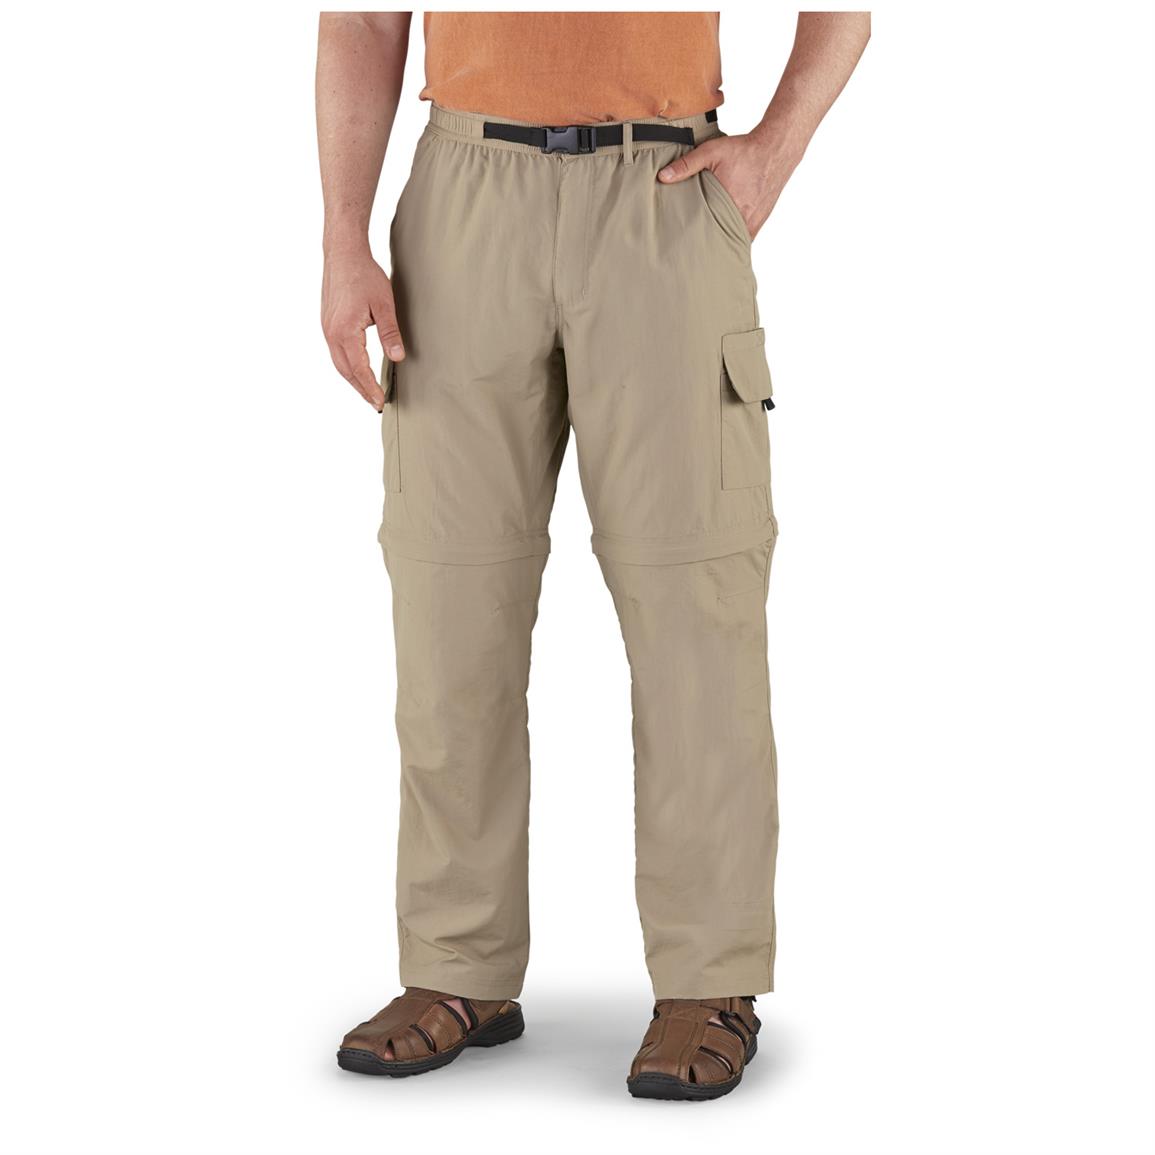 Guide Gear Men's Zip-Off River Pants - 622719, Jeans & Pants at ...